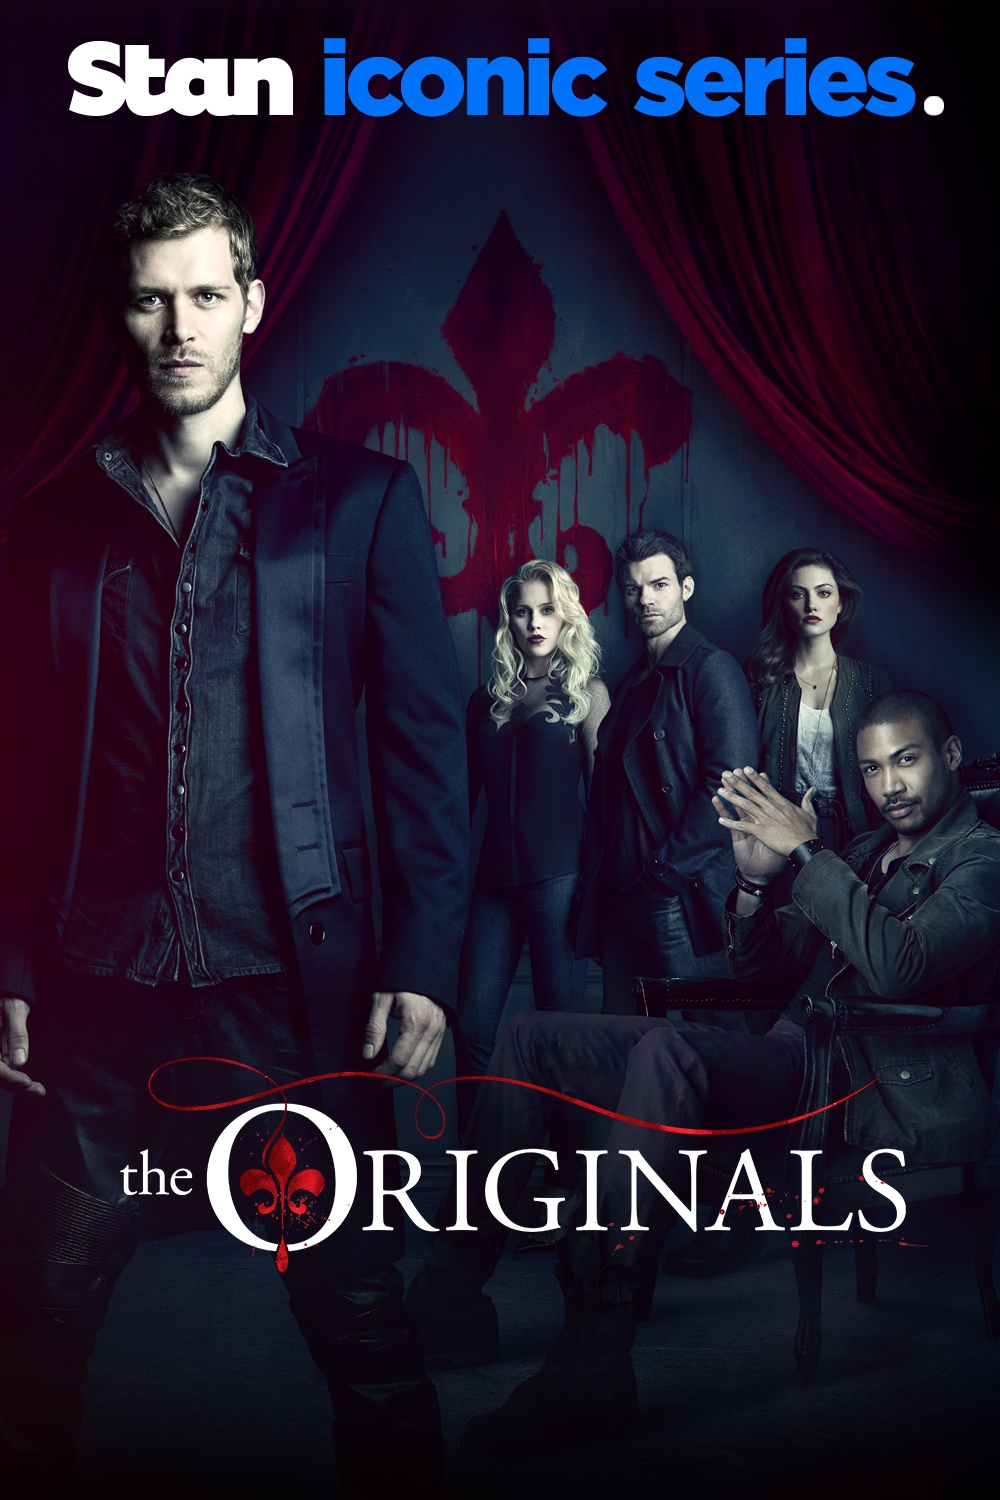 Watch The Originals Online, Stream Seasons 1-5 Now